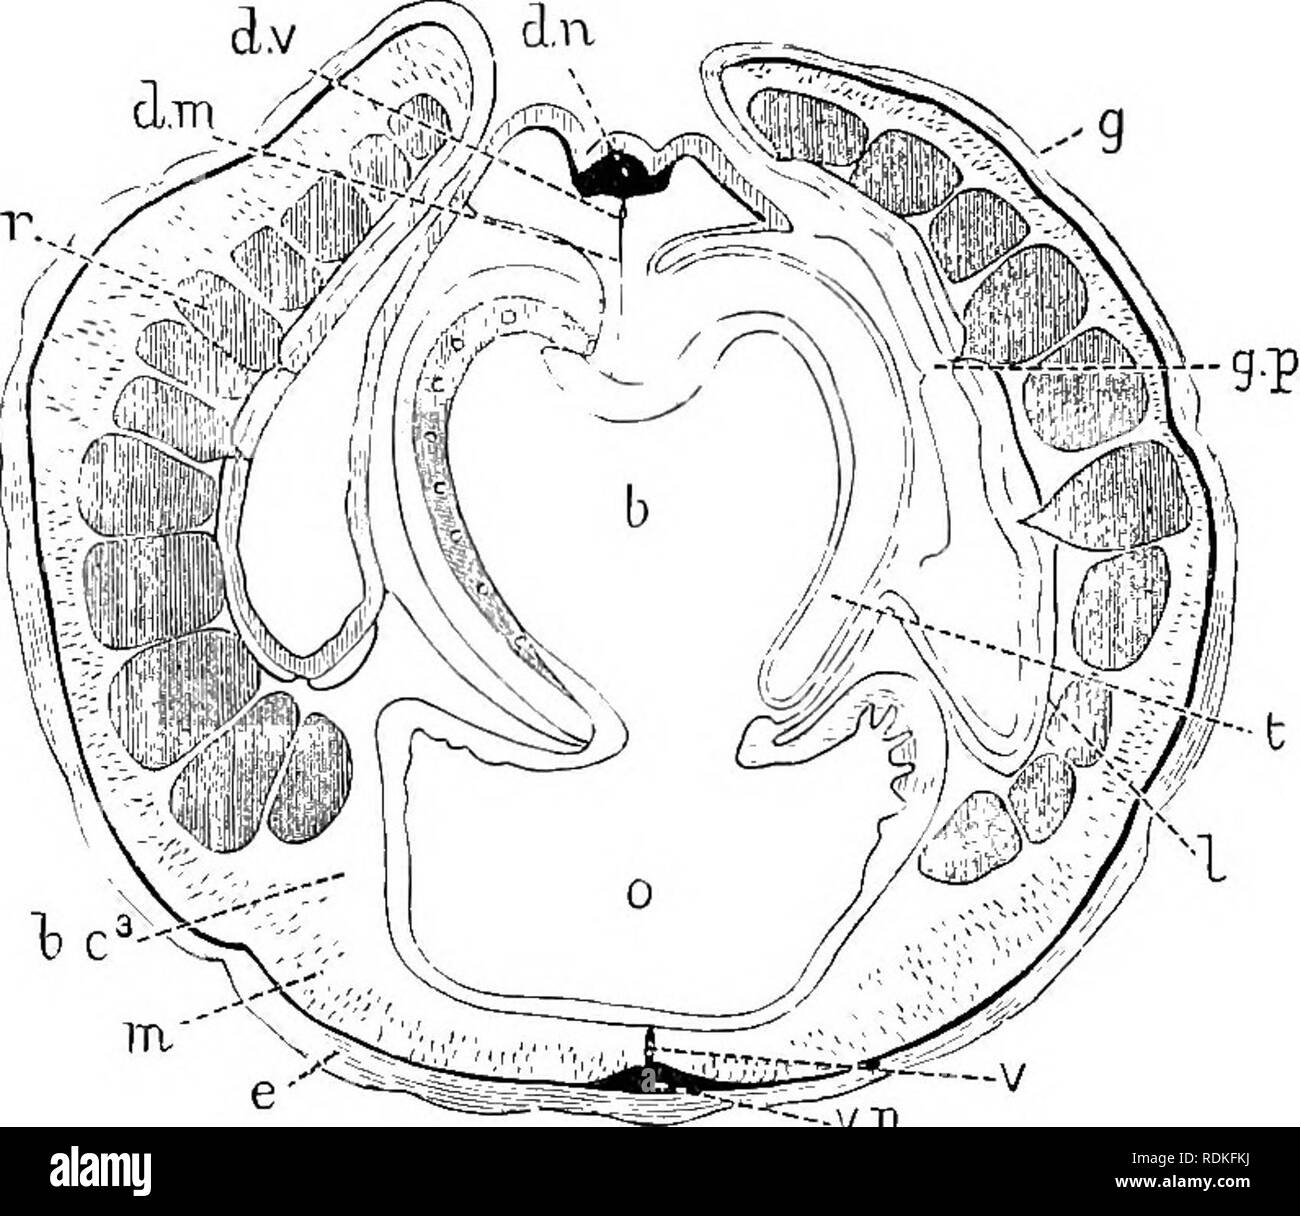 nervous system of balanoglossus